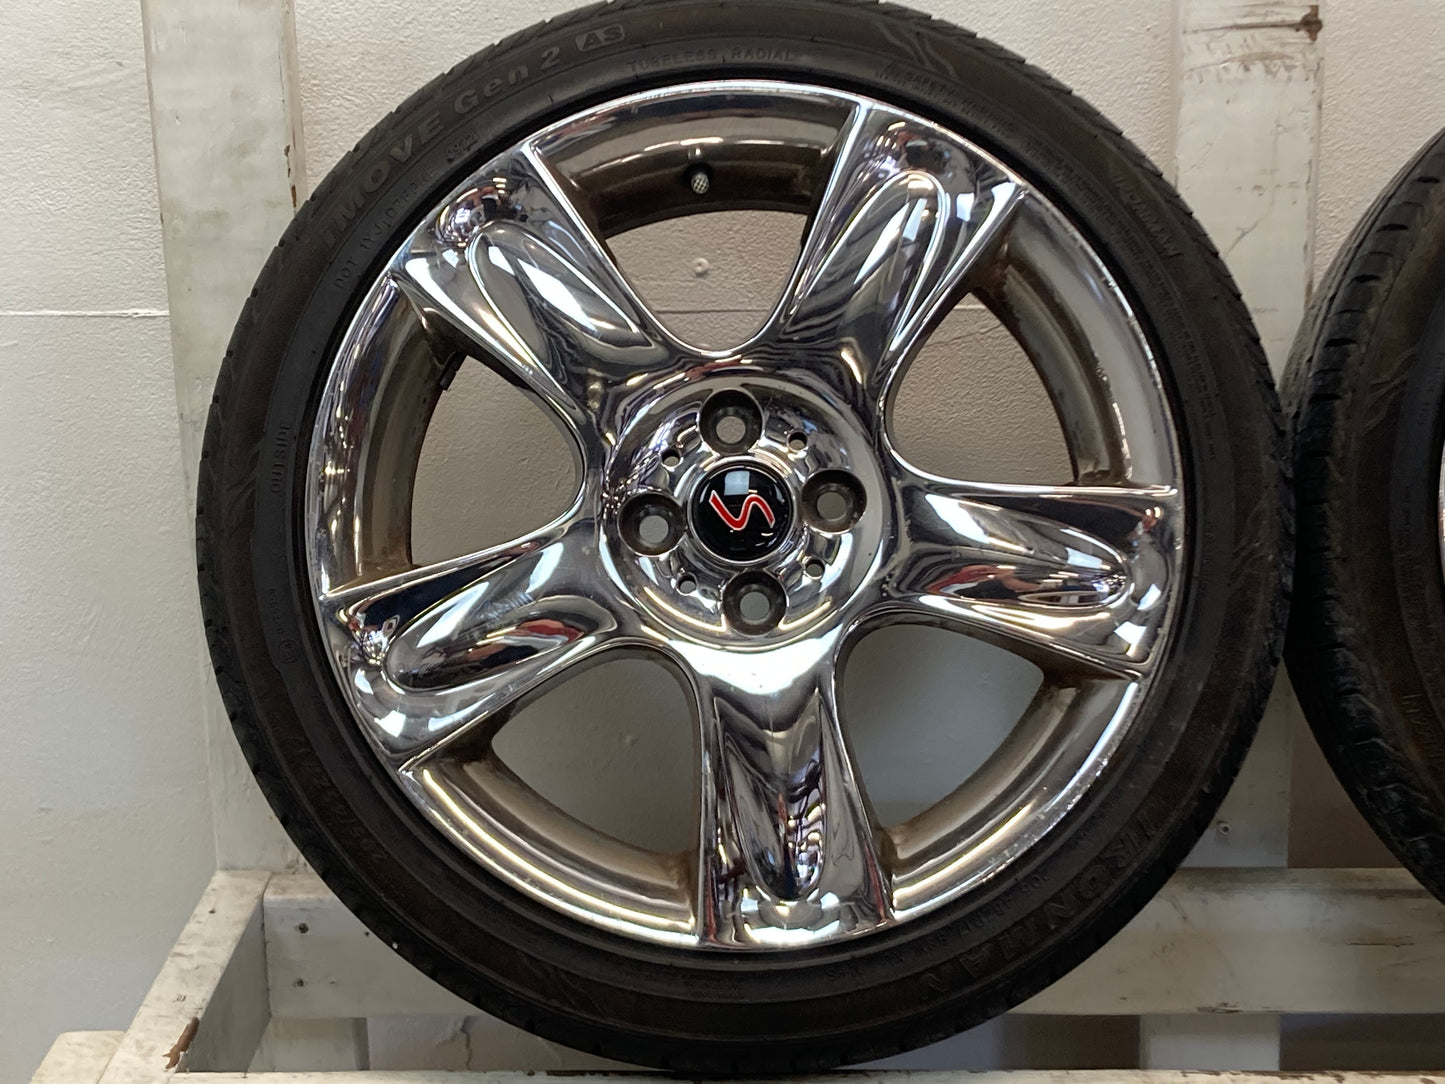 Mini Cooper Chrome 5-Star Spoke Wheels R91 36116763299 02-15 R5x 419